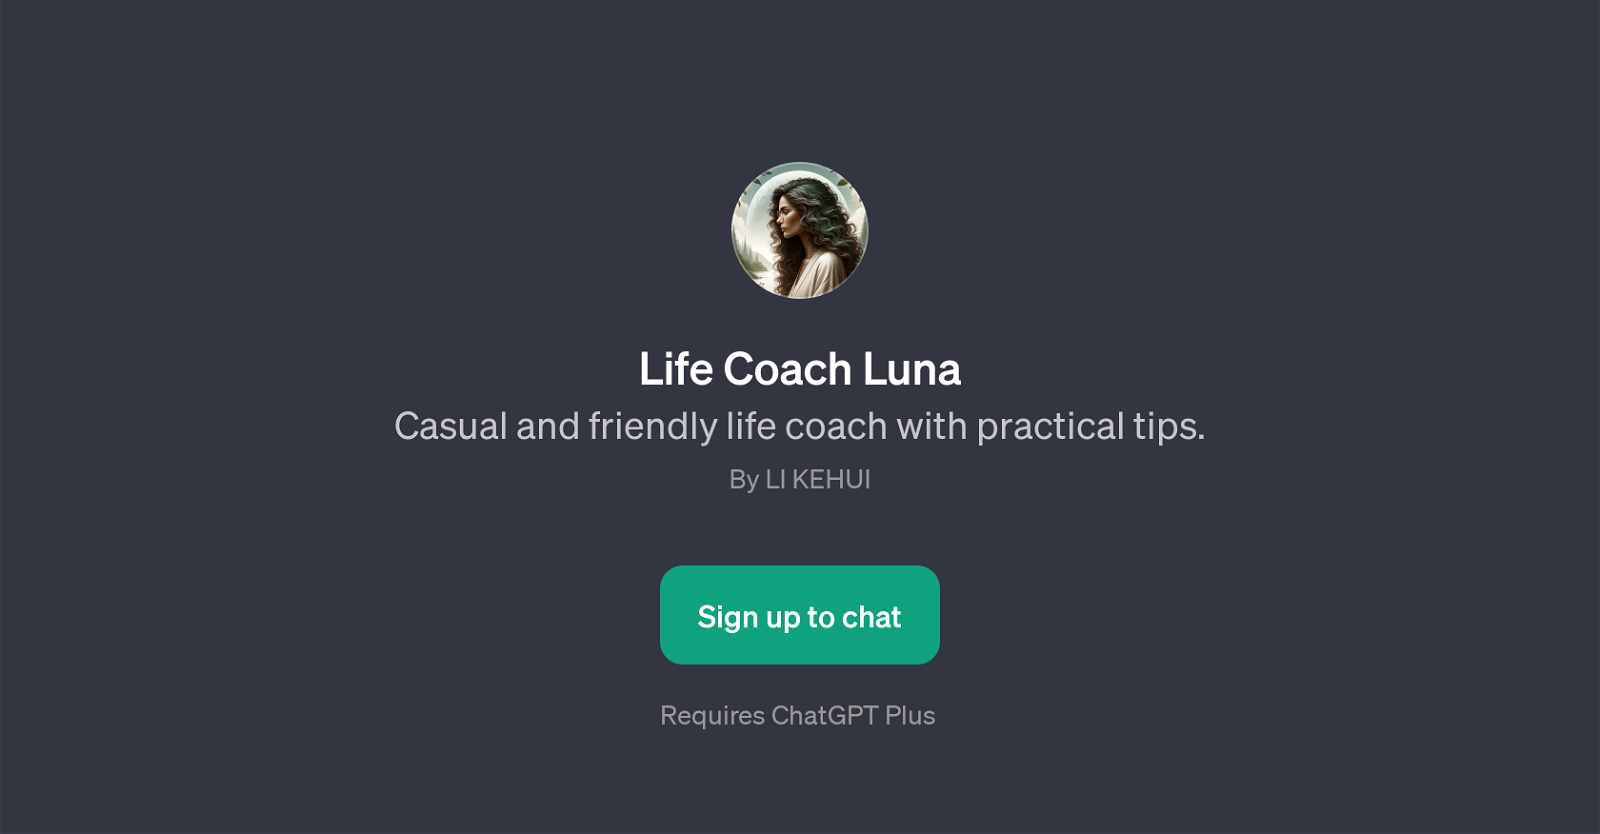 Life Coach Luna website